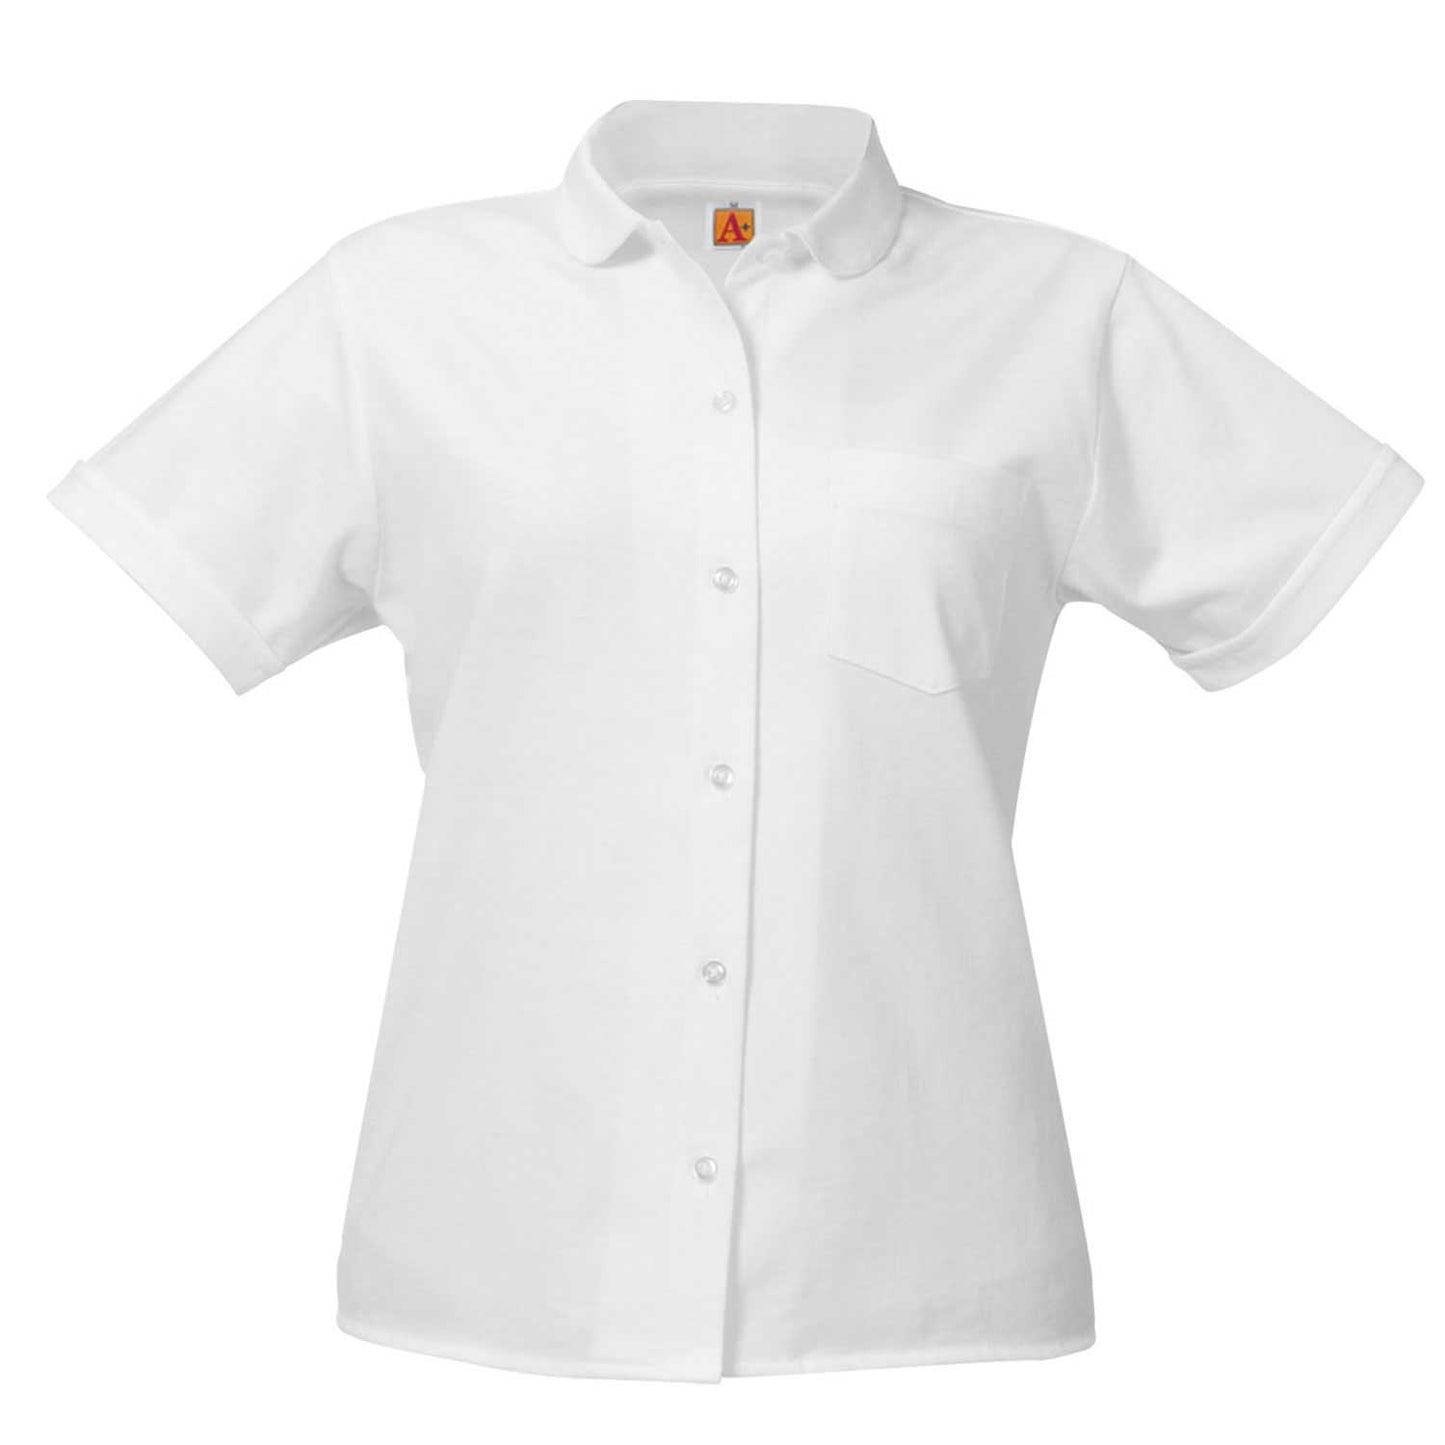 Jersey Knit Short Sleeve Shirt (Female) w/Logo - 1106